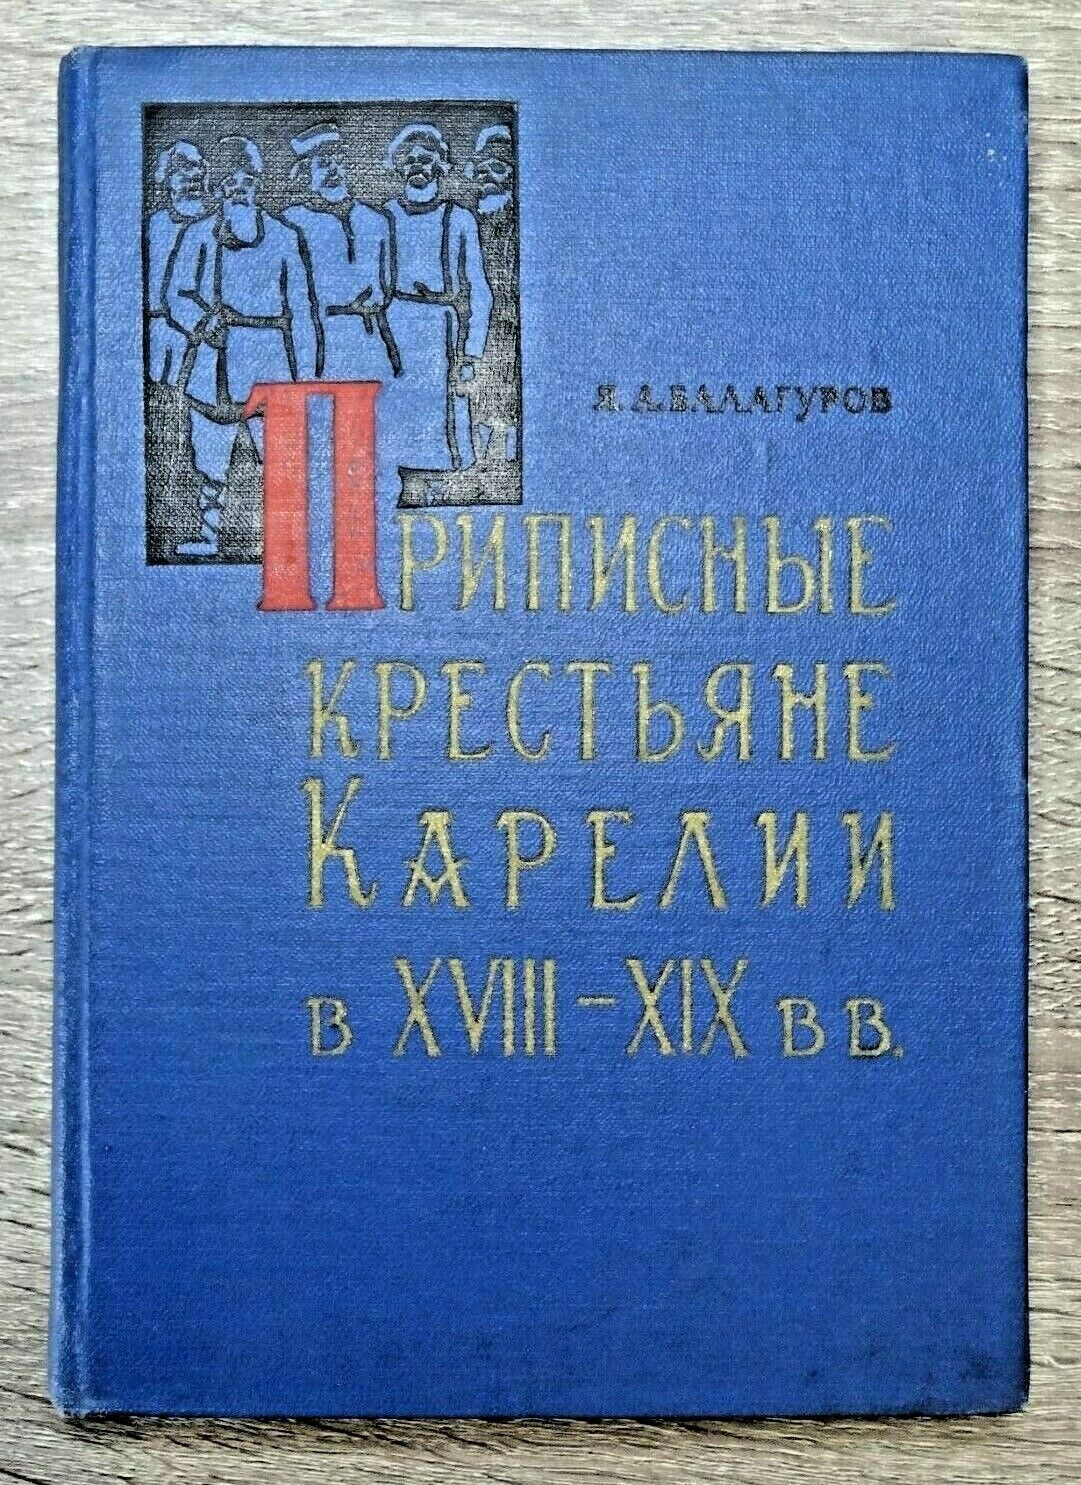 1962 Крестьяне Карелии Peasants of Karelia ethnos history 1000 rare Russian book